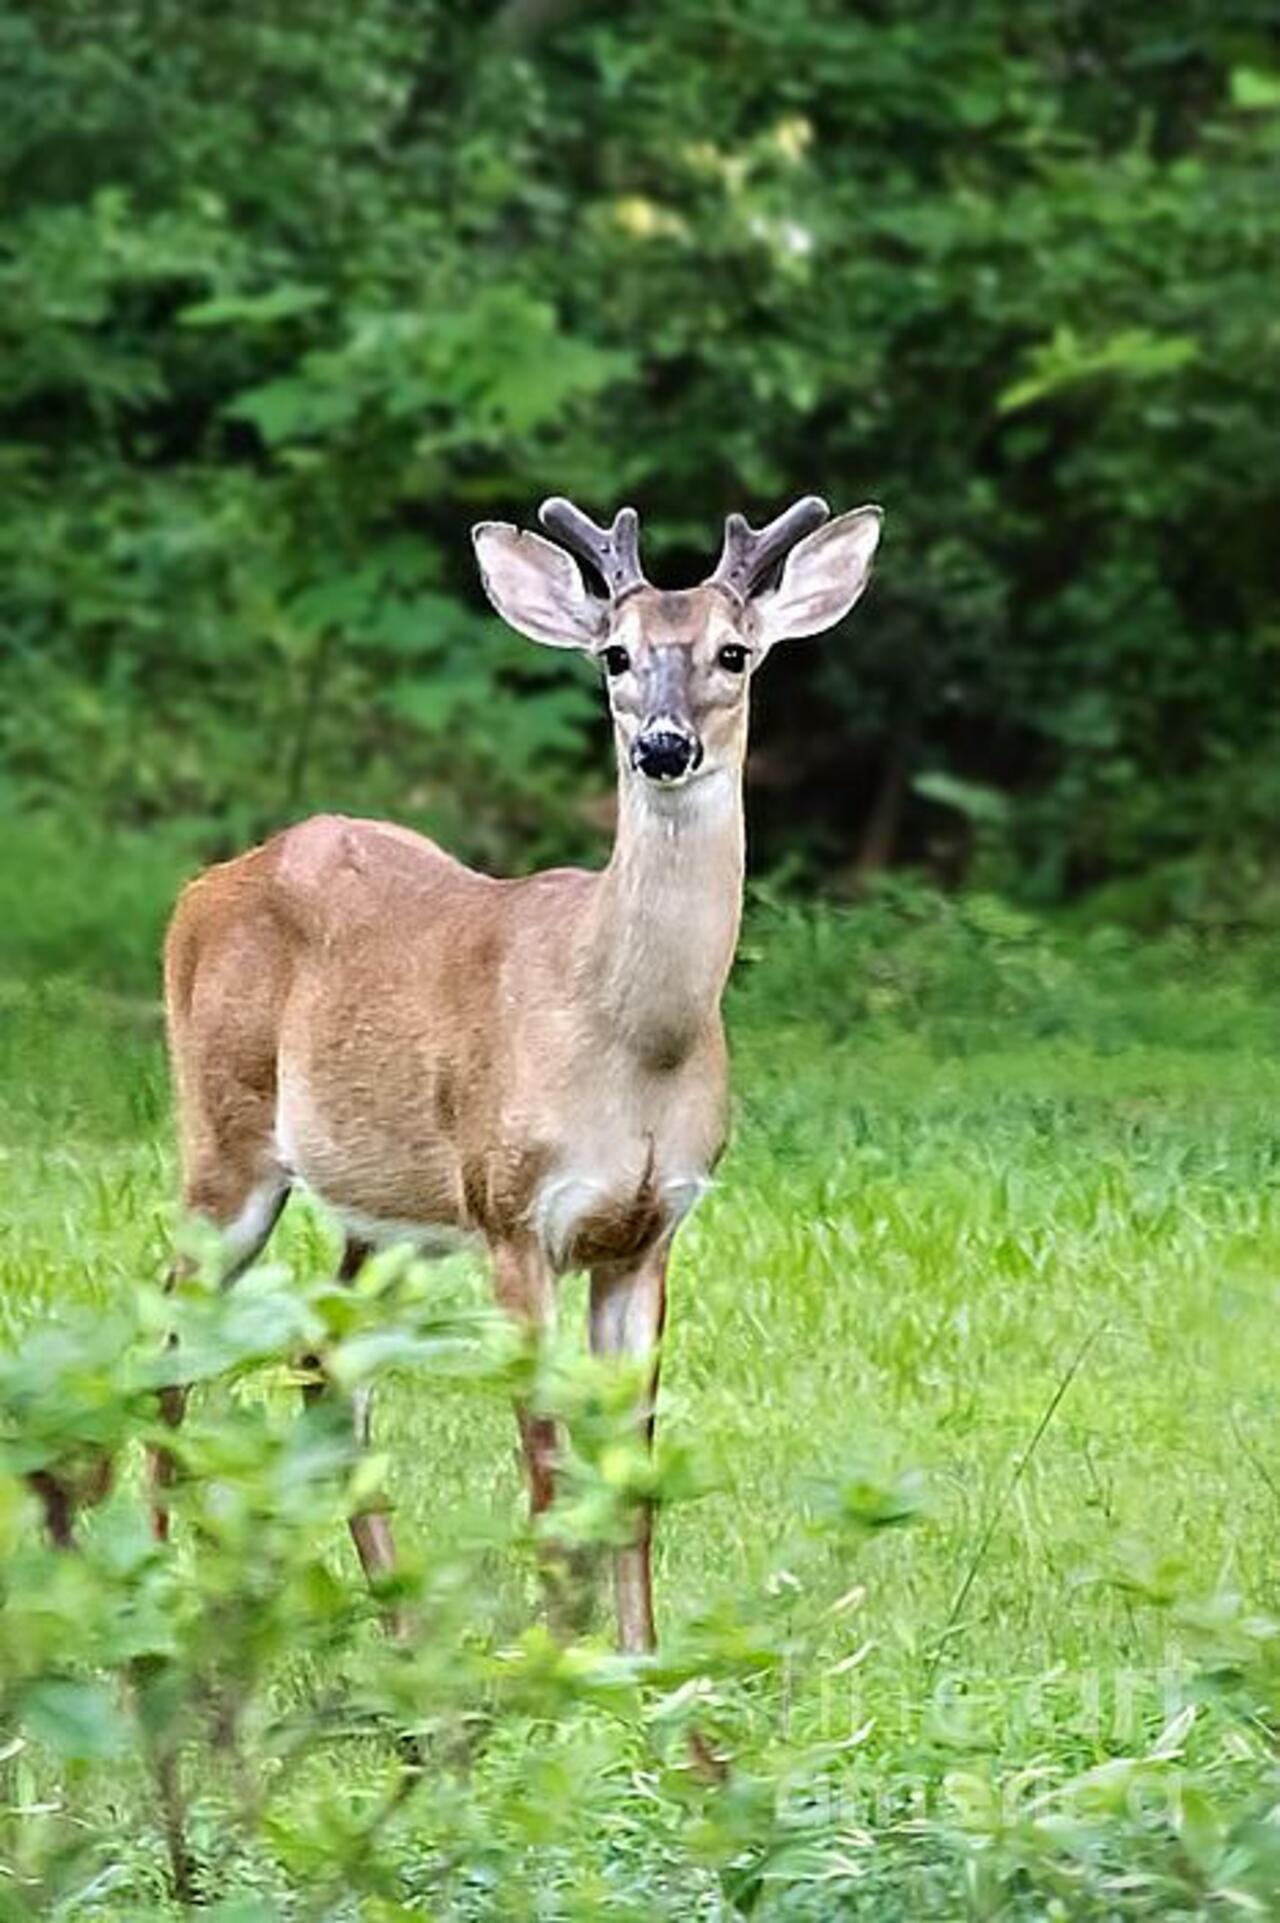 #spring has many wonderful surprises! “Young Buck” - http://jemmyarcher.com/featured/young-buck-jemmy-archer.html http://t.co/CALFoMzuge #nature #deer #wildlife #photoart